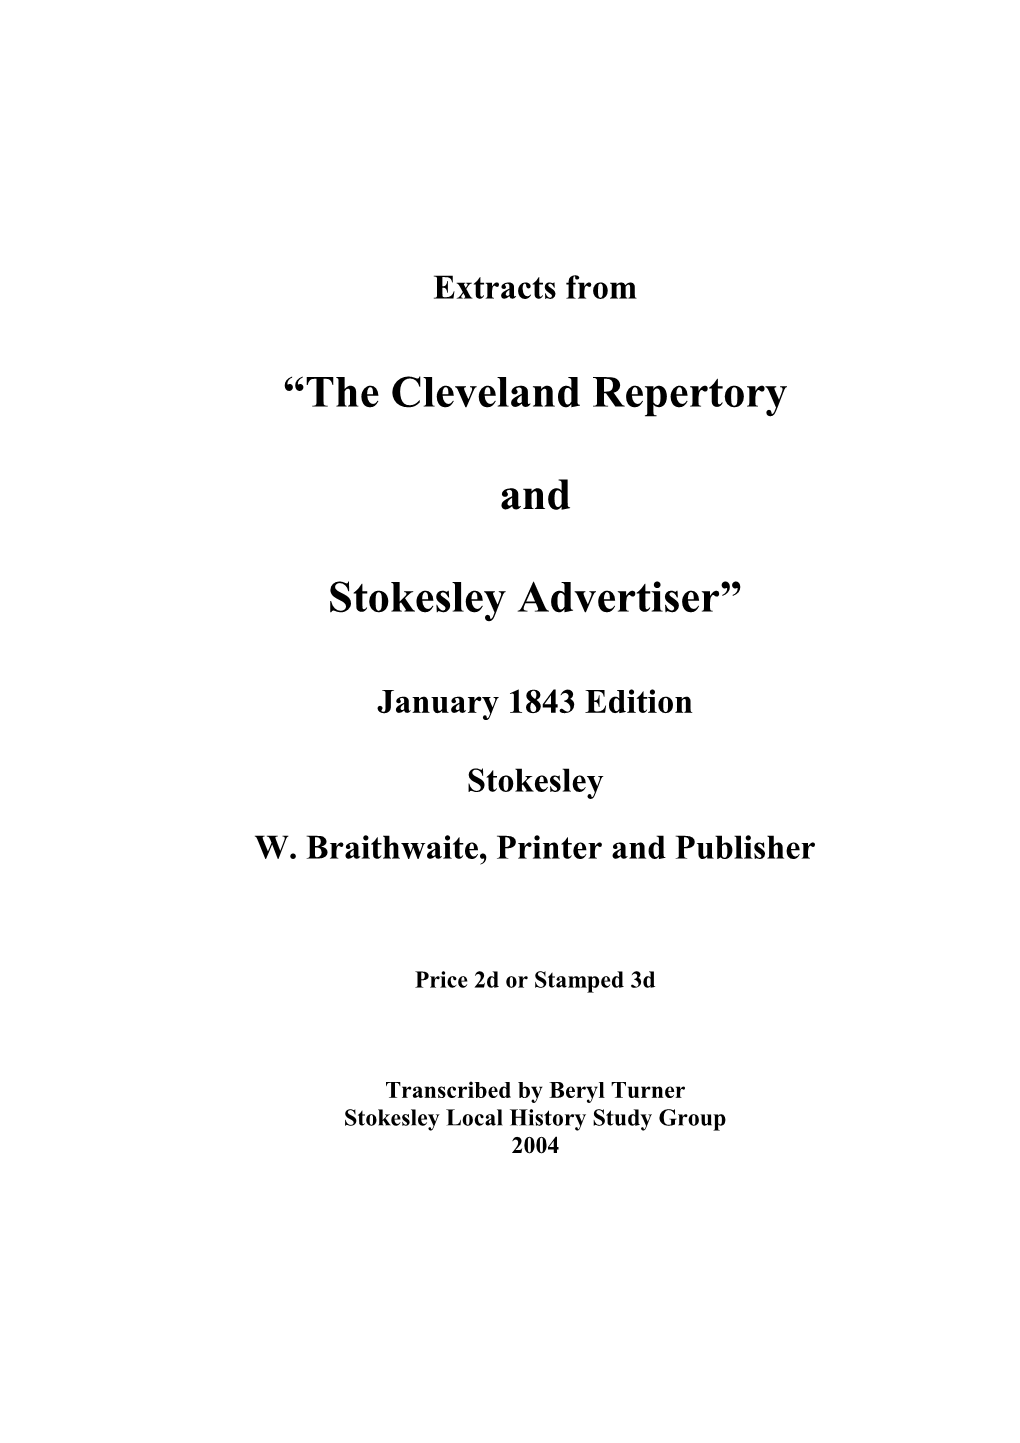 Cleveland Repertory & Stokesley Advertiser Jan 1843